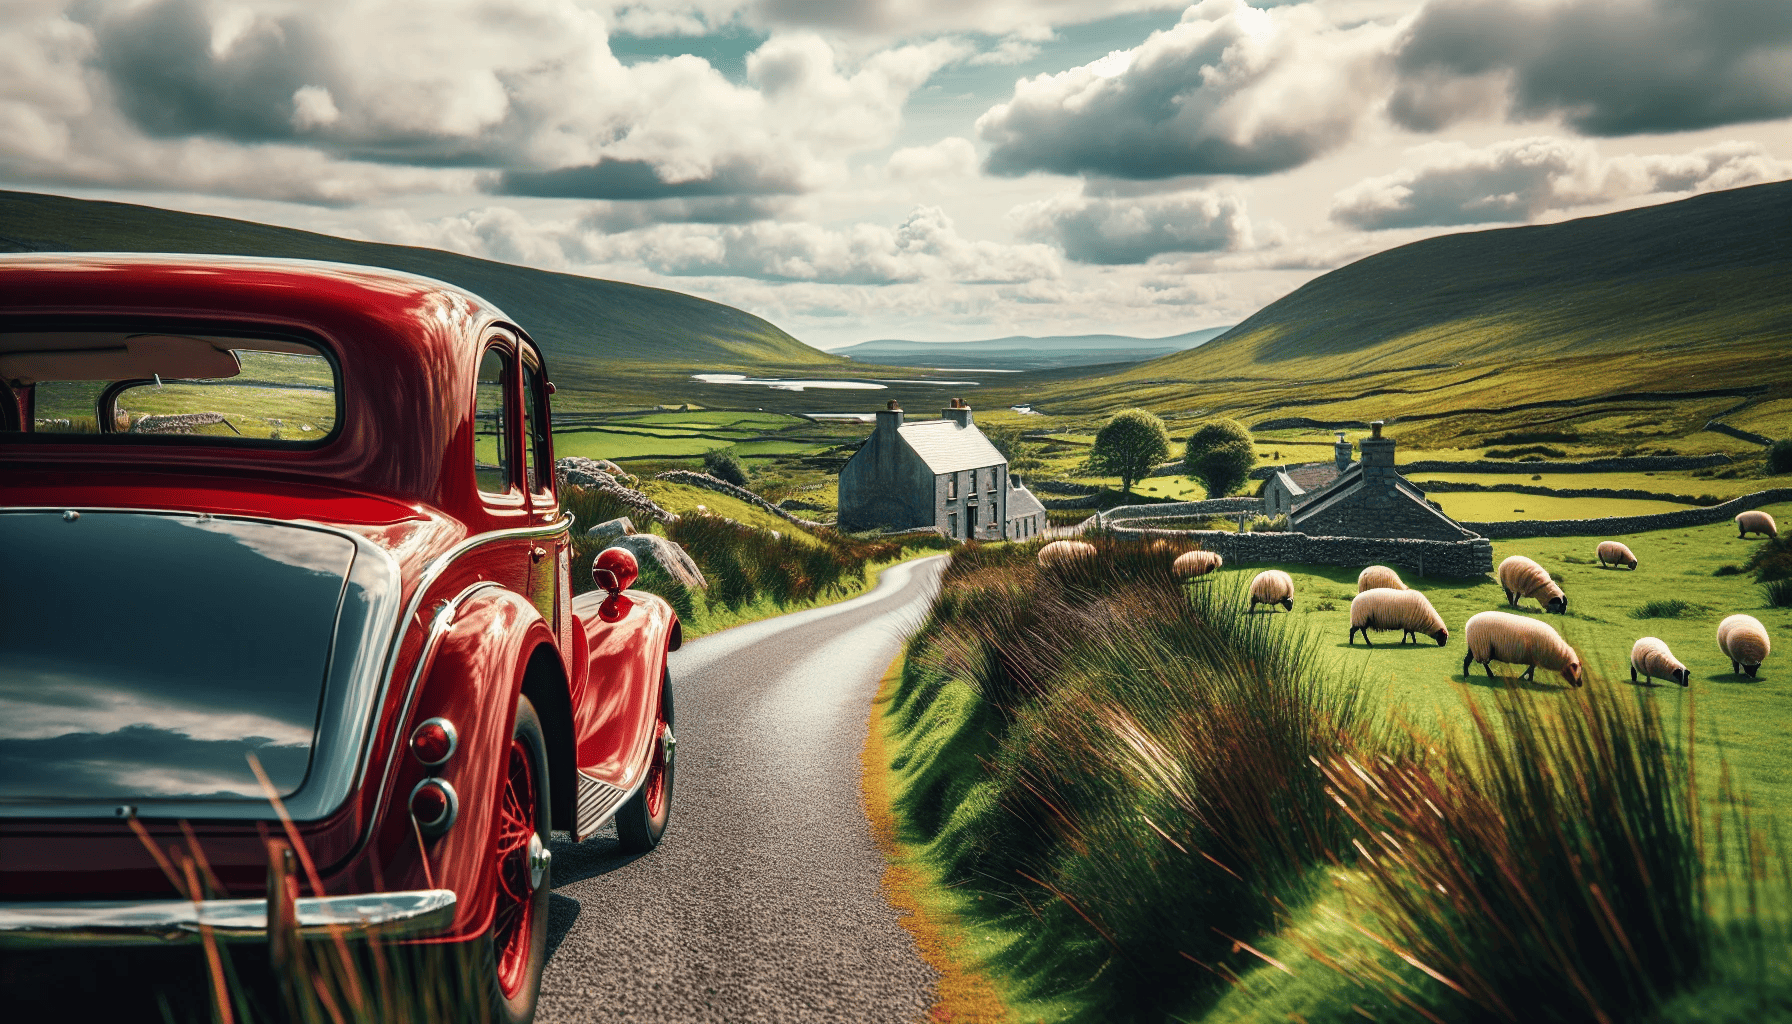 Exploring Ireland by car